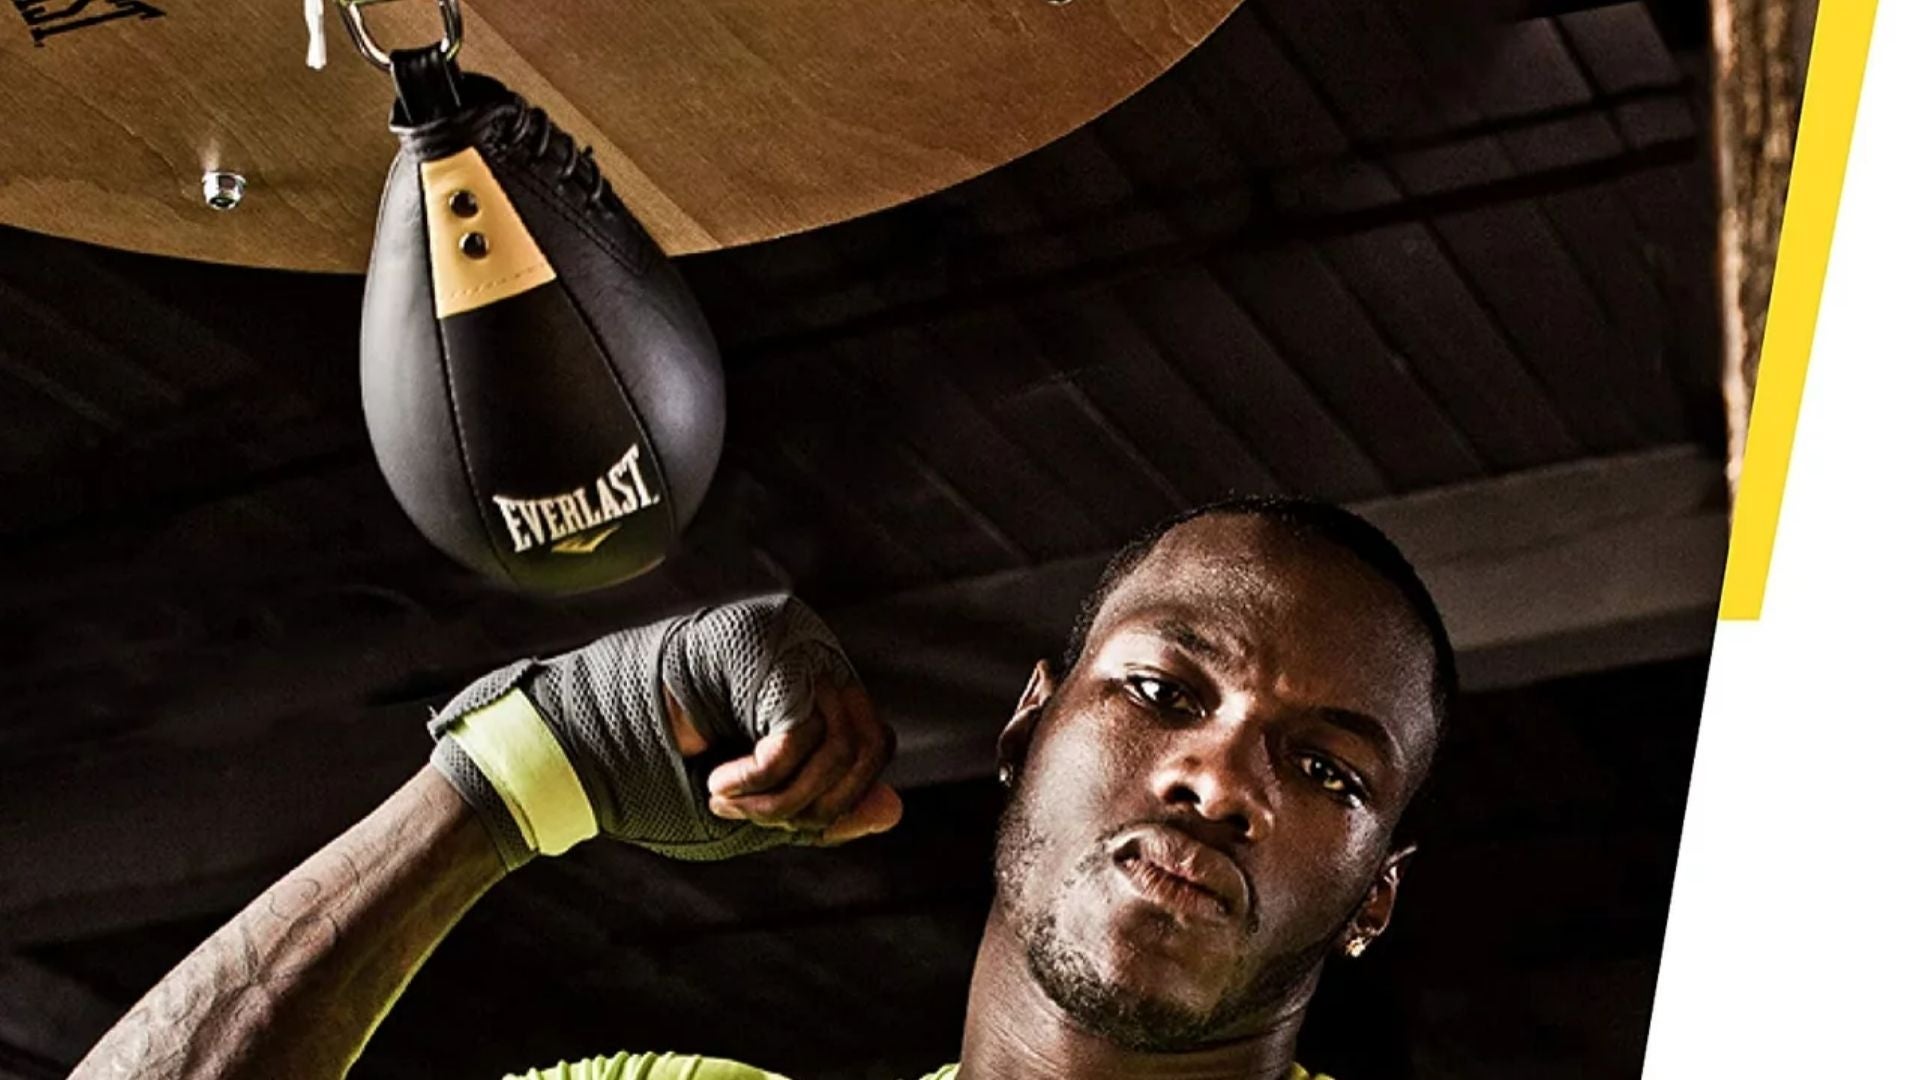 Boxing Sandbags Punching Bag Training Kicking Workout Cotton Canvas Durable 